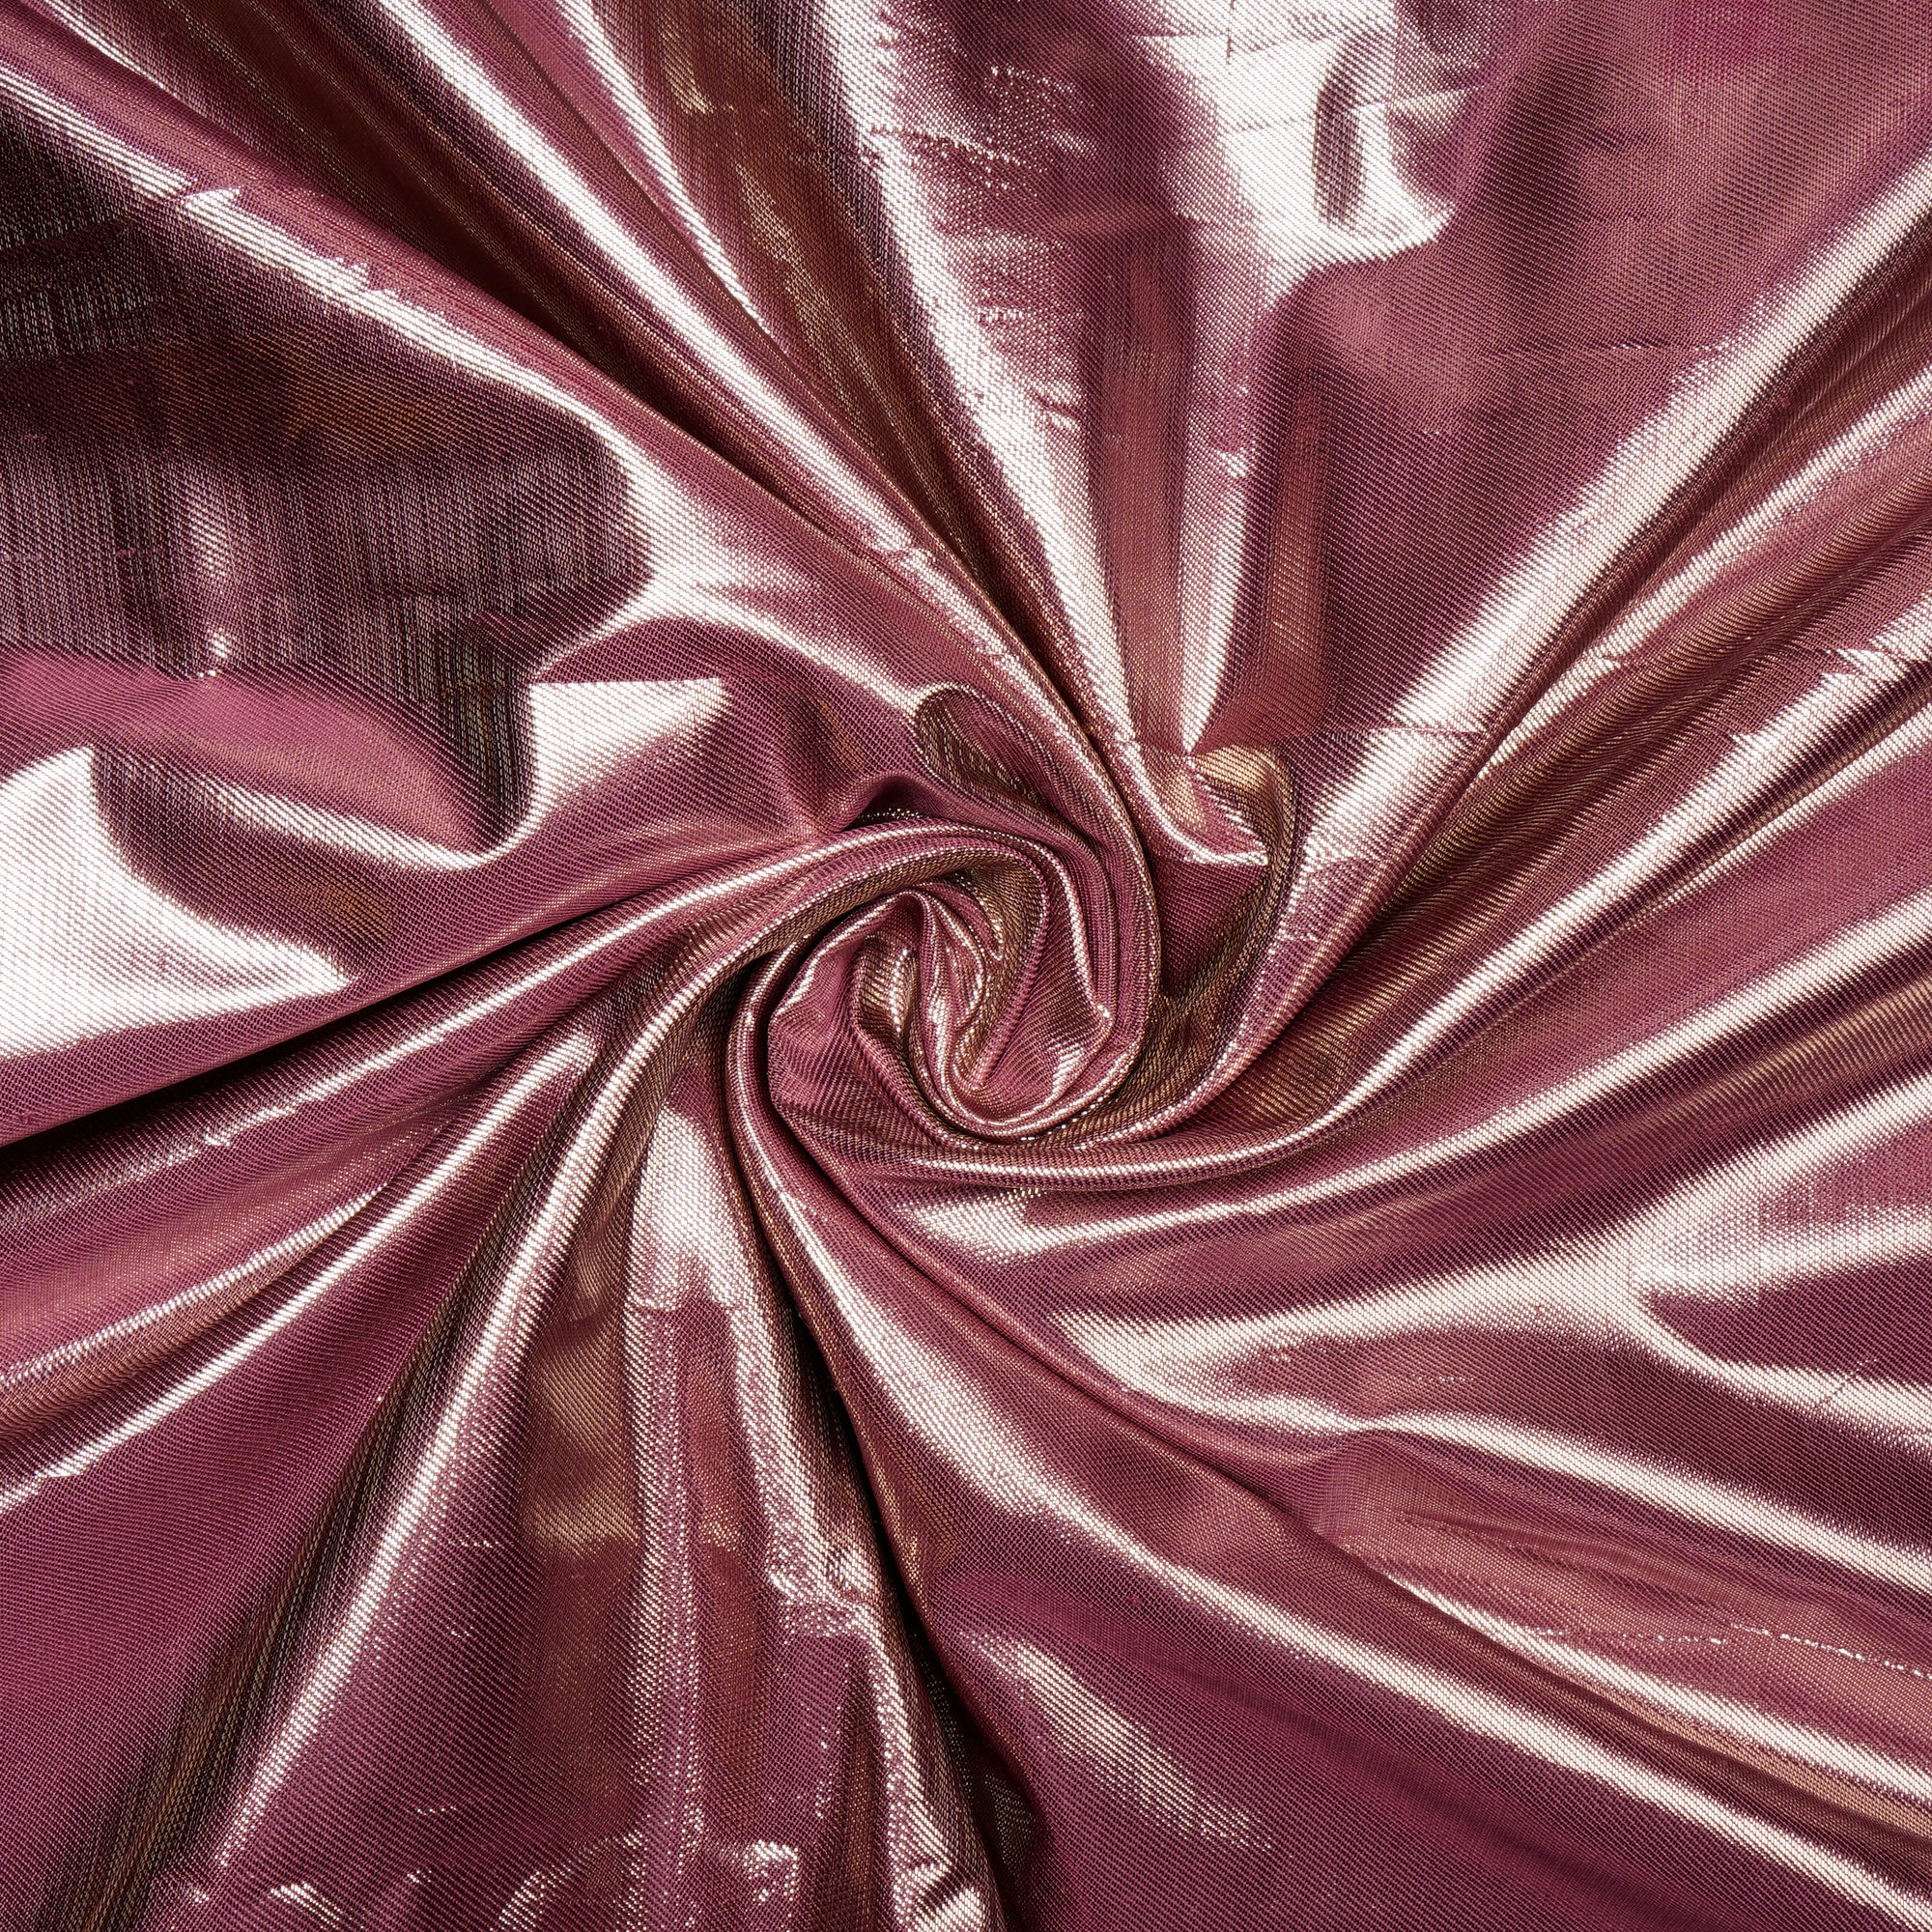 Prism Pink-Silver Color Metallic Dupion Silk Fabric